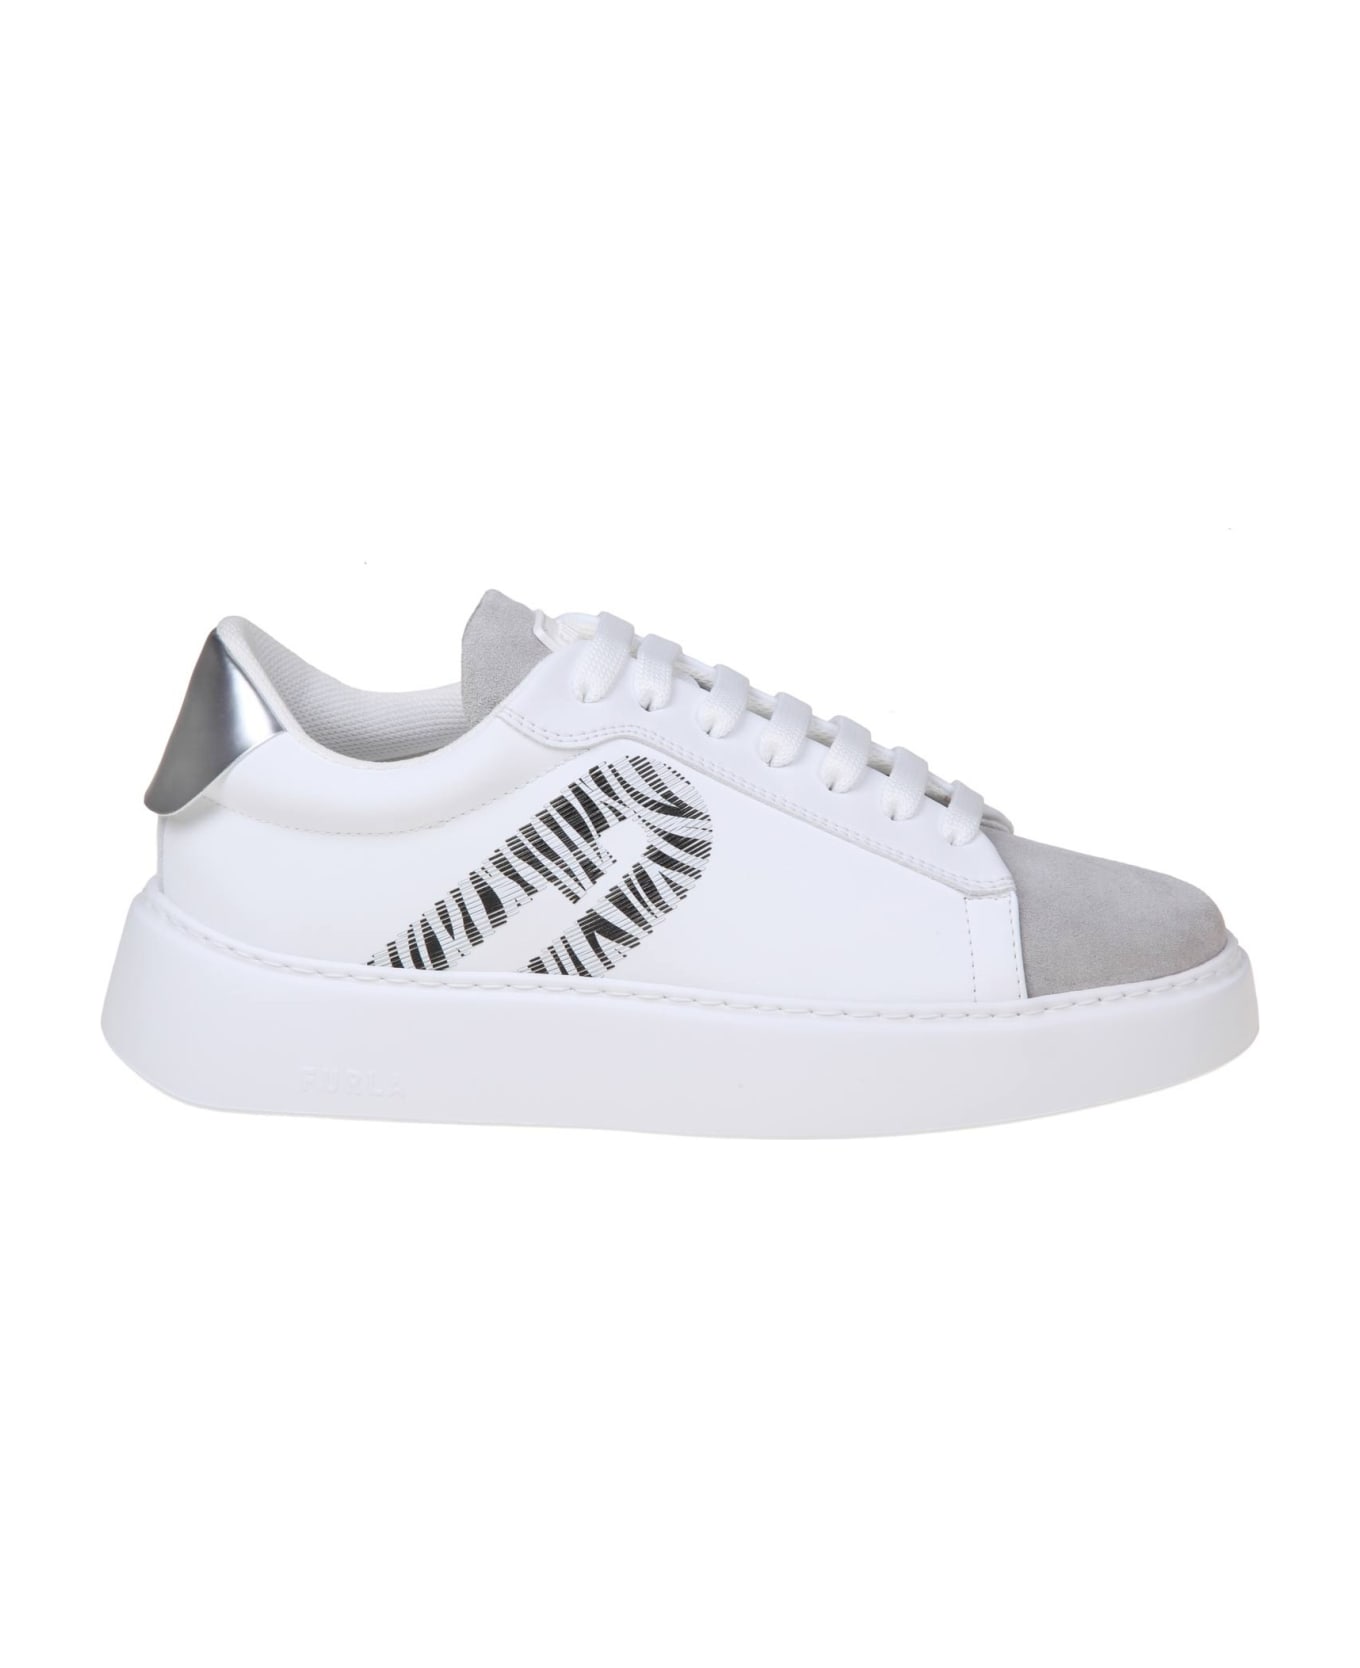 Furla Sports Sneakers In White Leather - WHITE/TALCO